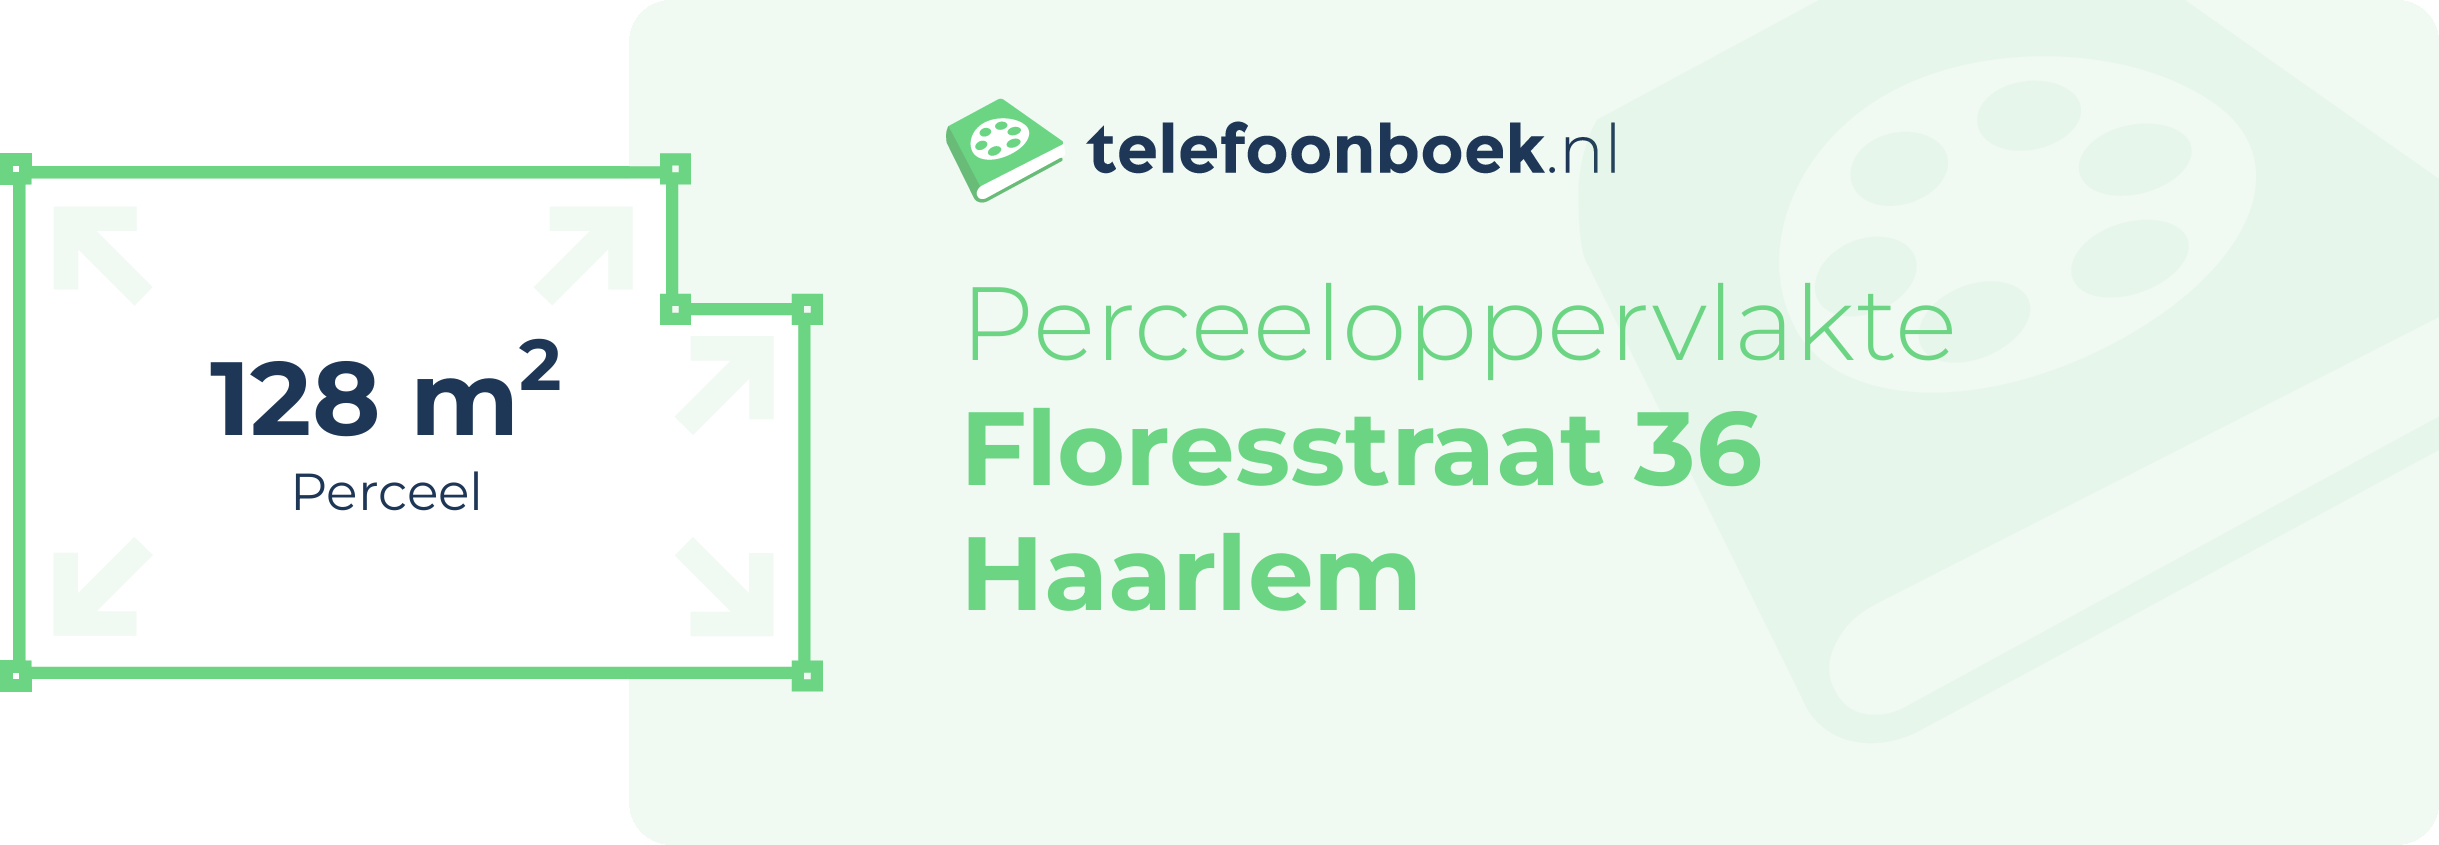 Perceeloppervlakte Floresstraat 36 Haarlem